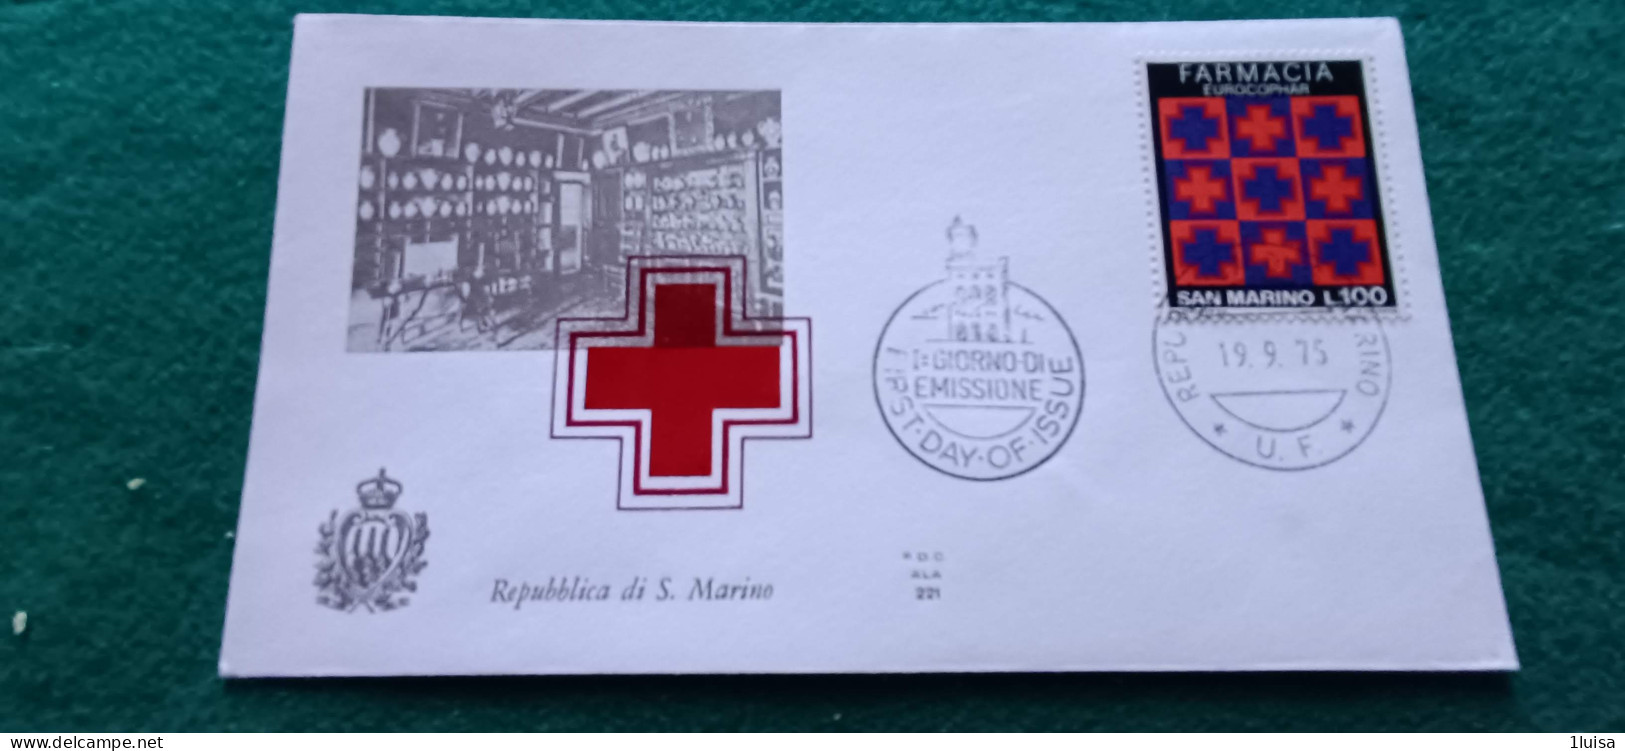 SAN MARINO 19/9/75 Croce Rossa Farmacia - Eilpost